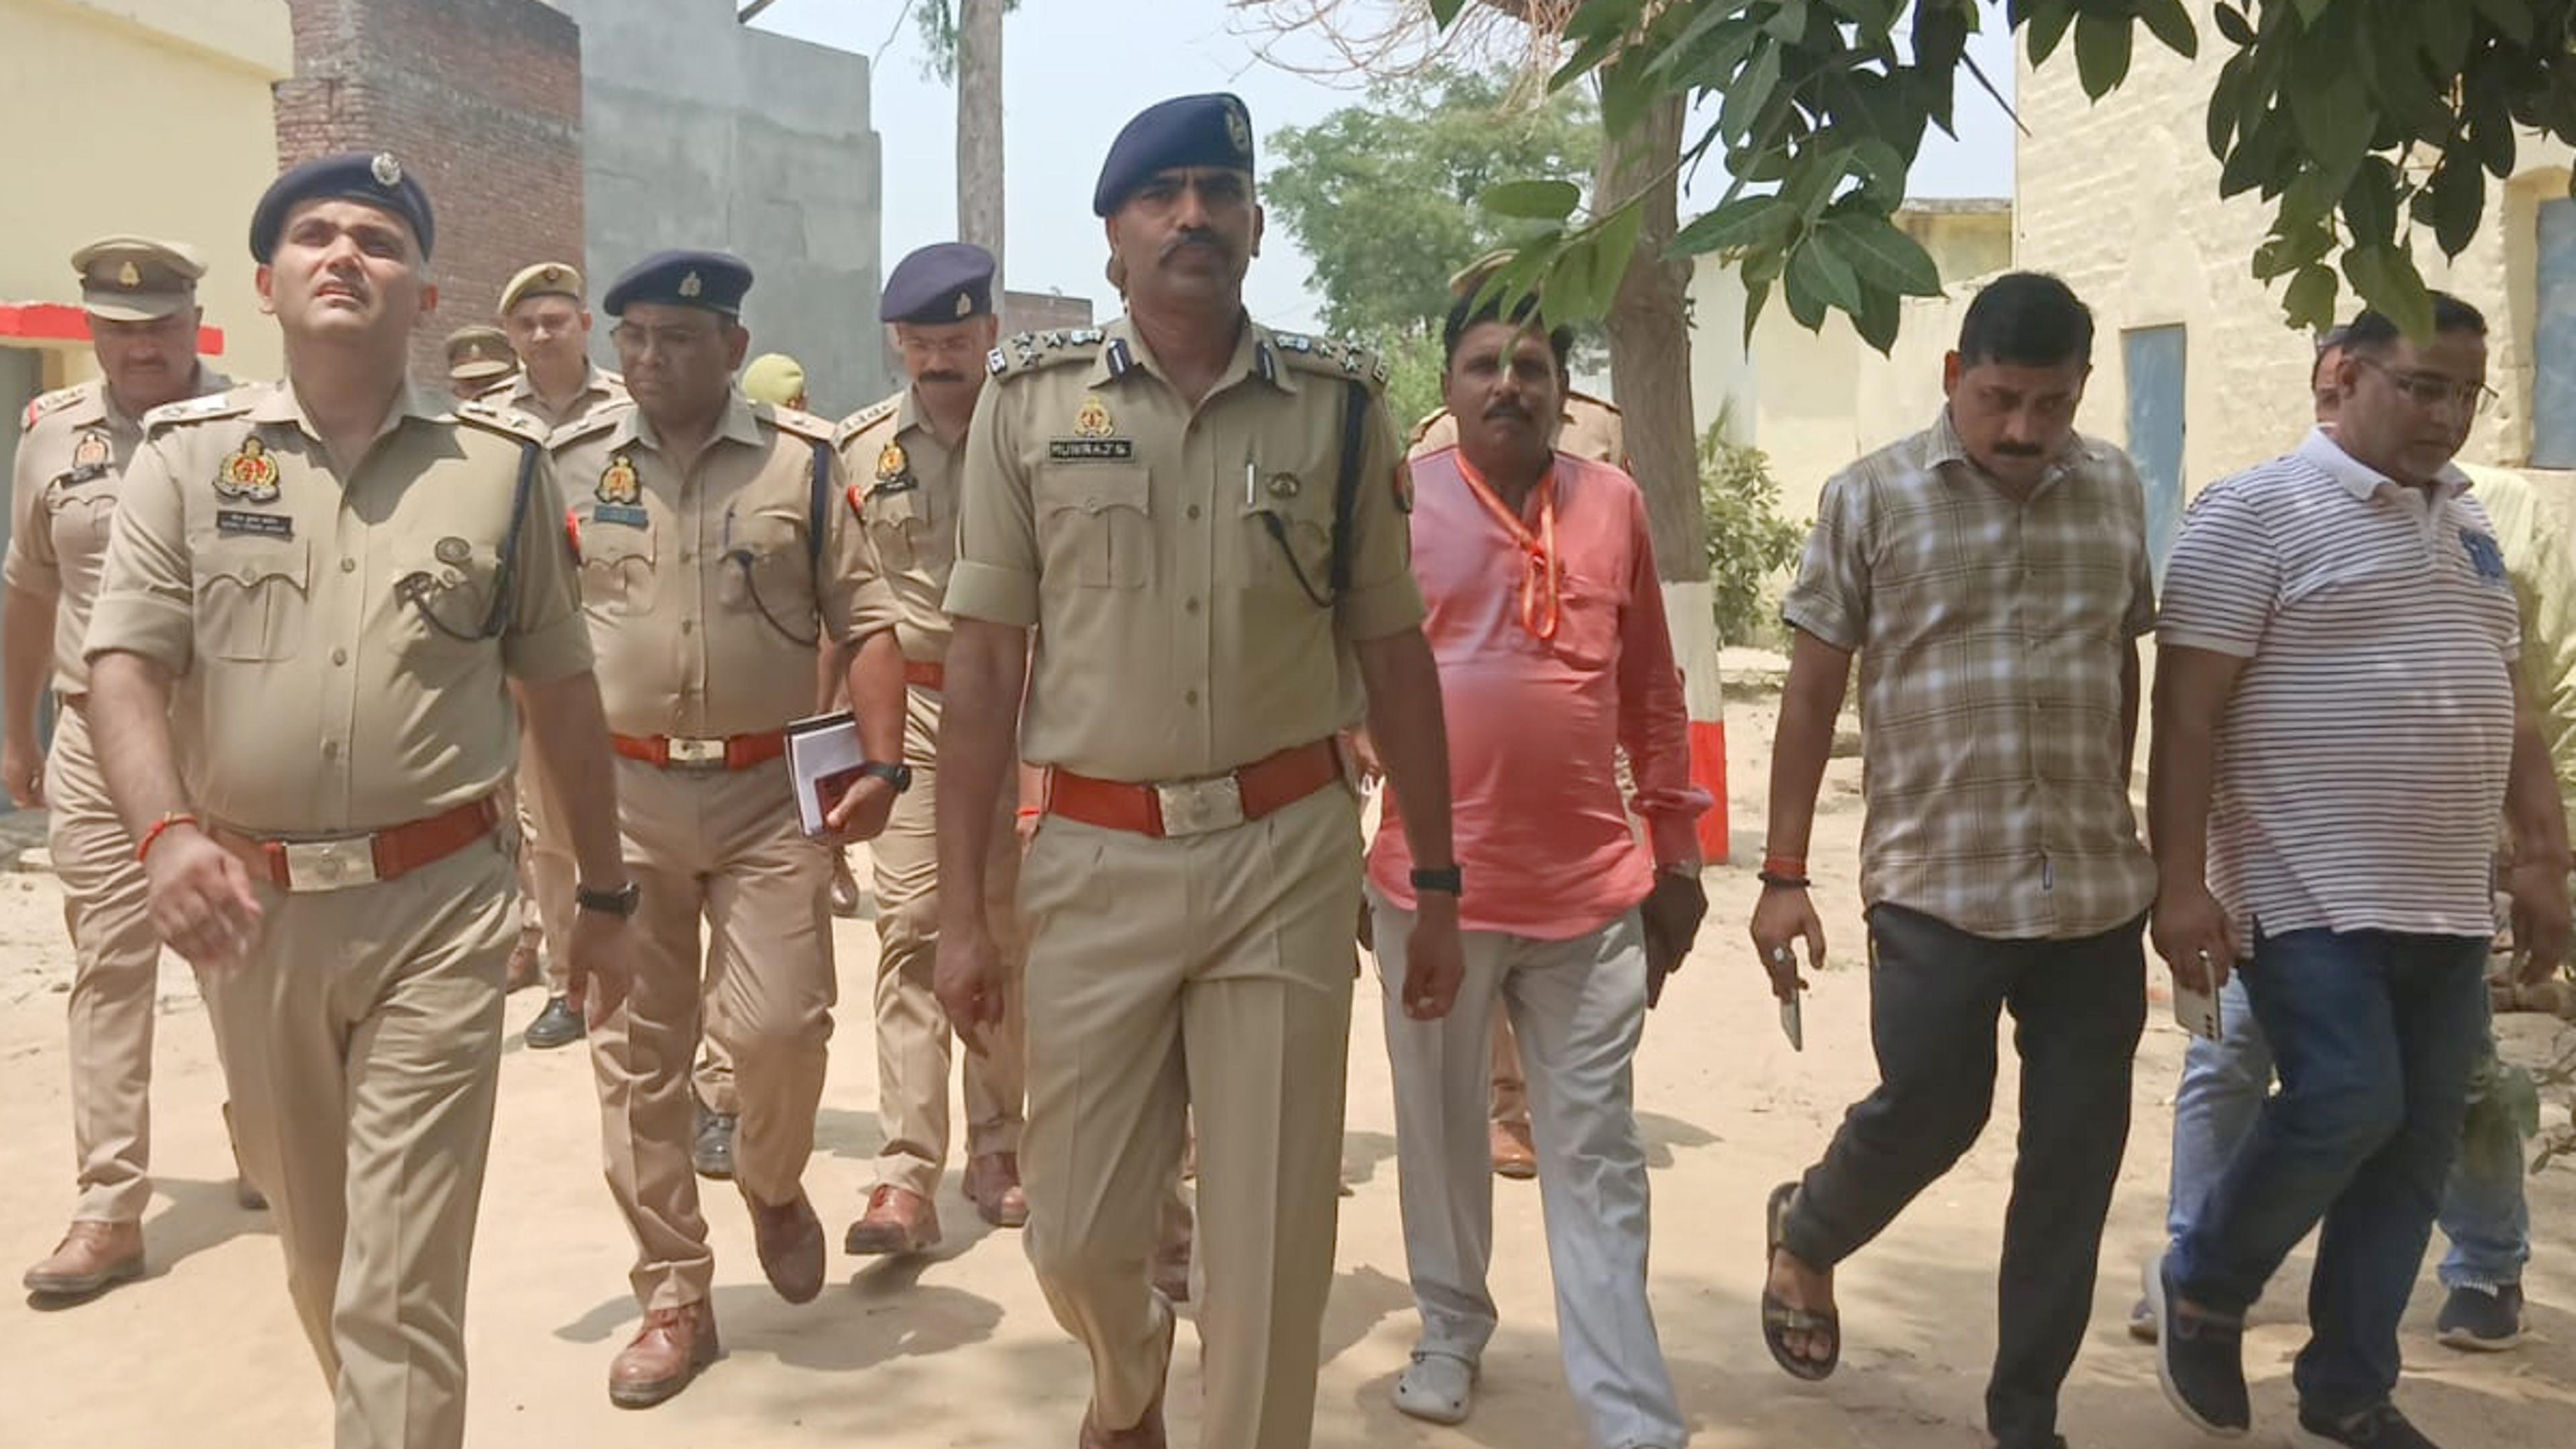 Bijnor News: दो दिवसीय दौरे पर बिजनौर पहुंचे डीआईजी, कंट्रोल रूम और पुलिस लाइन
का किया निरीक्षण